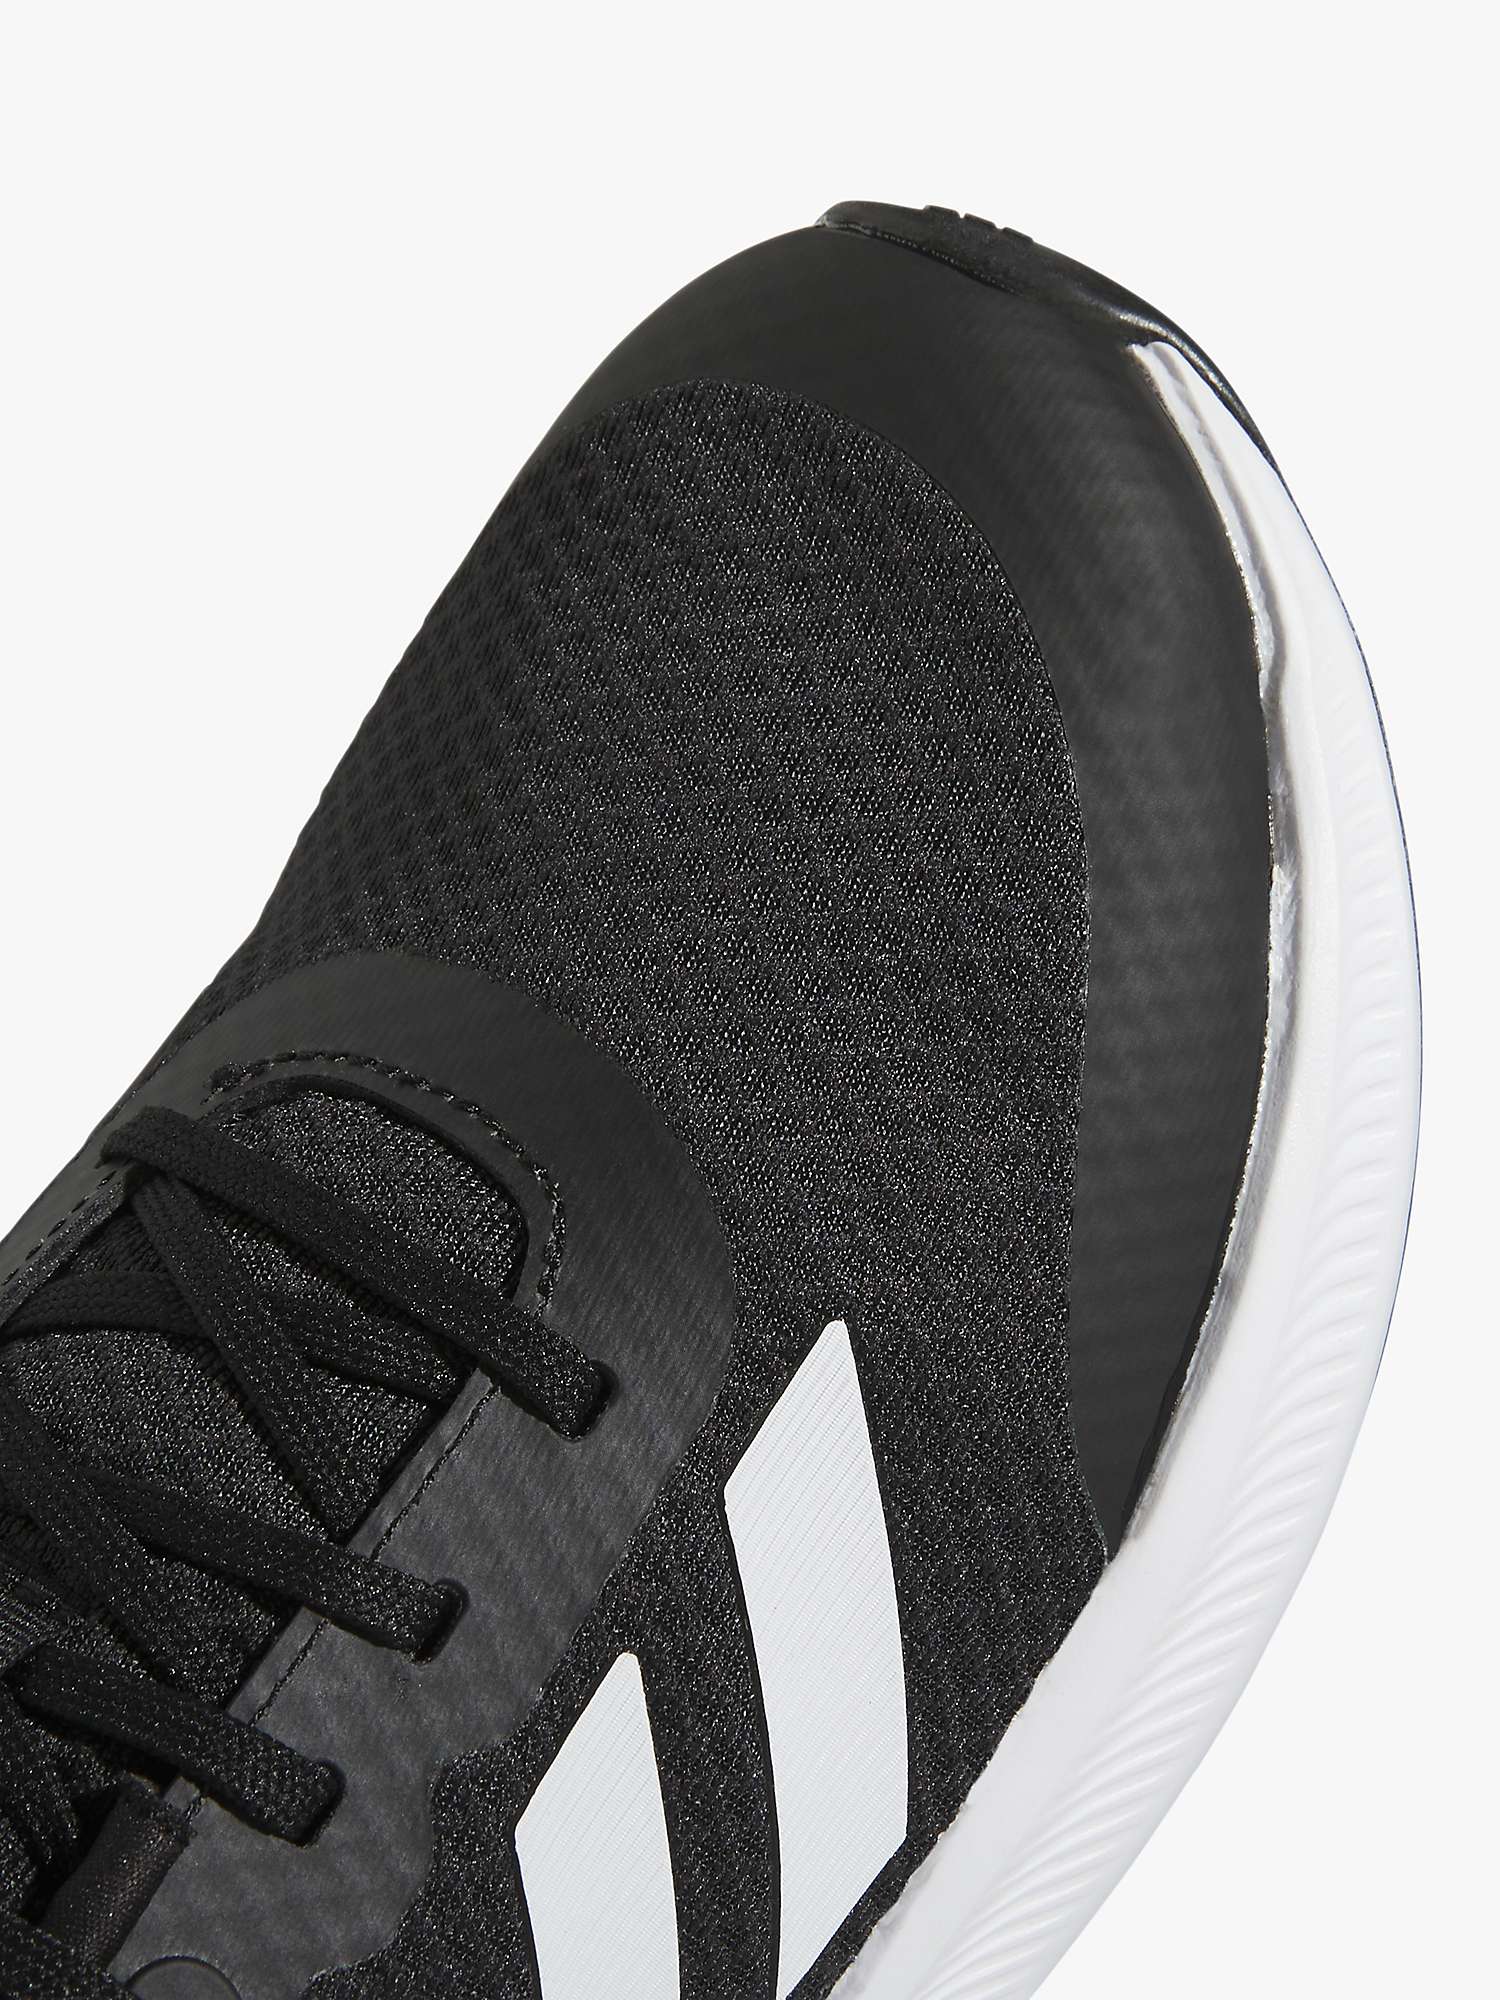 Buy adidas Kids' Runfalcon 3.0 Running Shoes Online at johnlewis.com